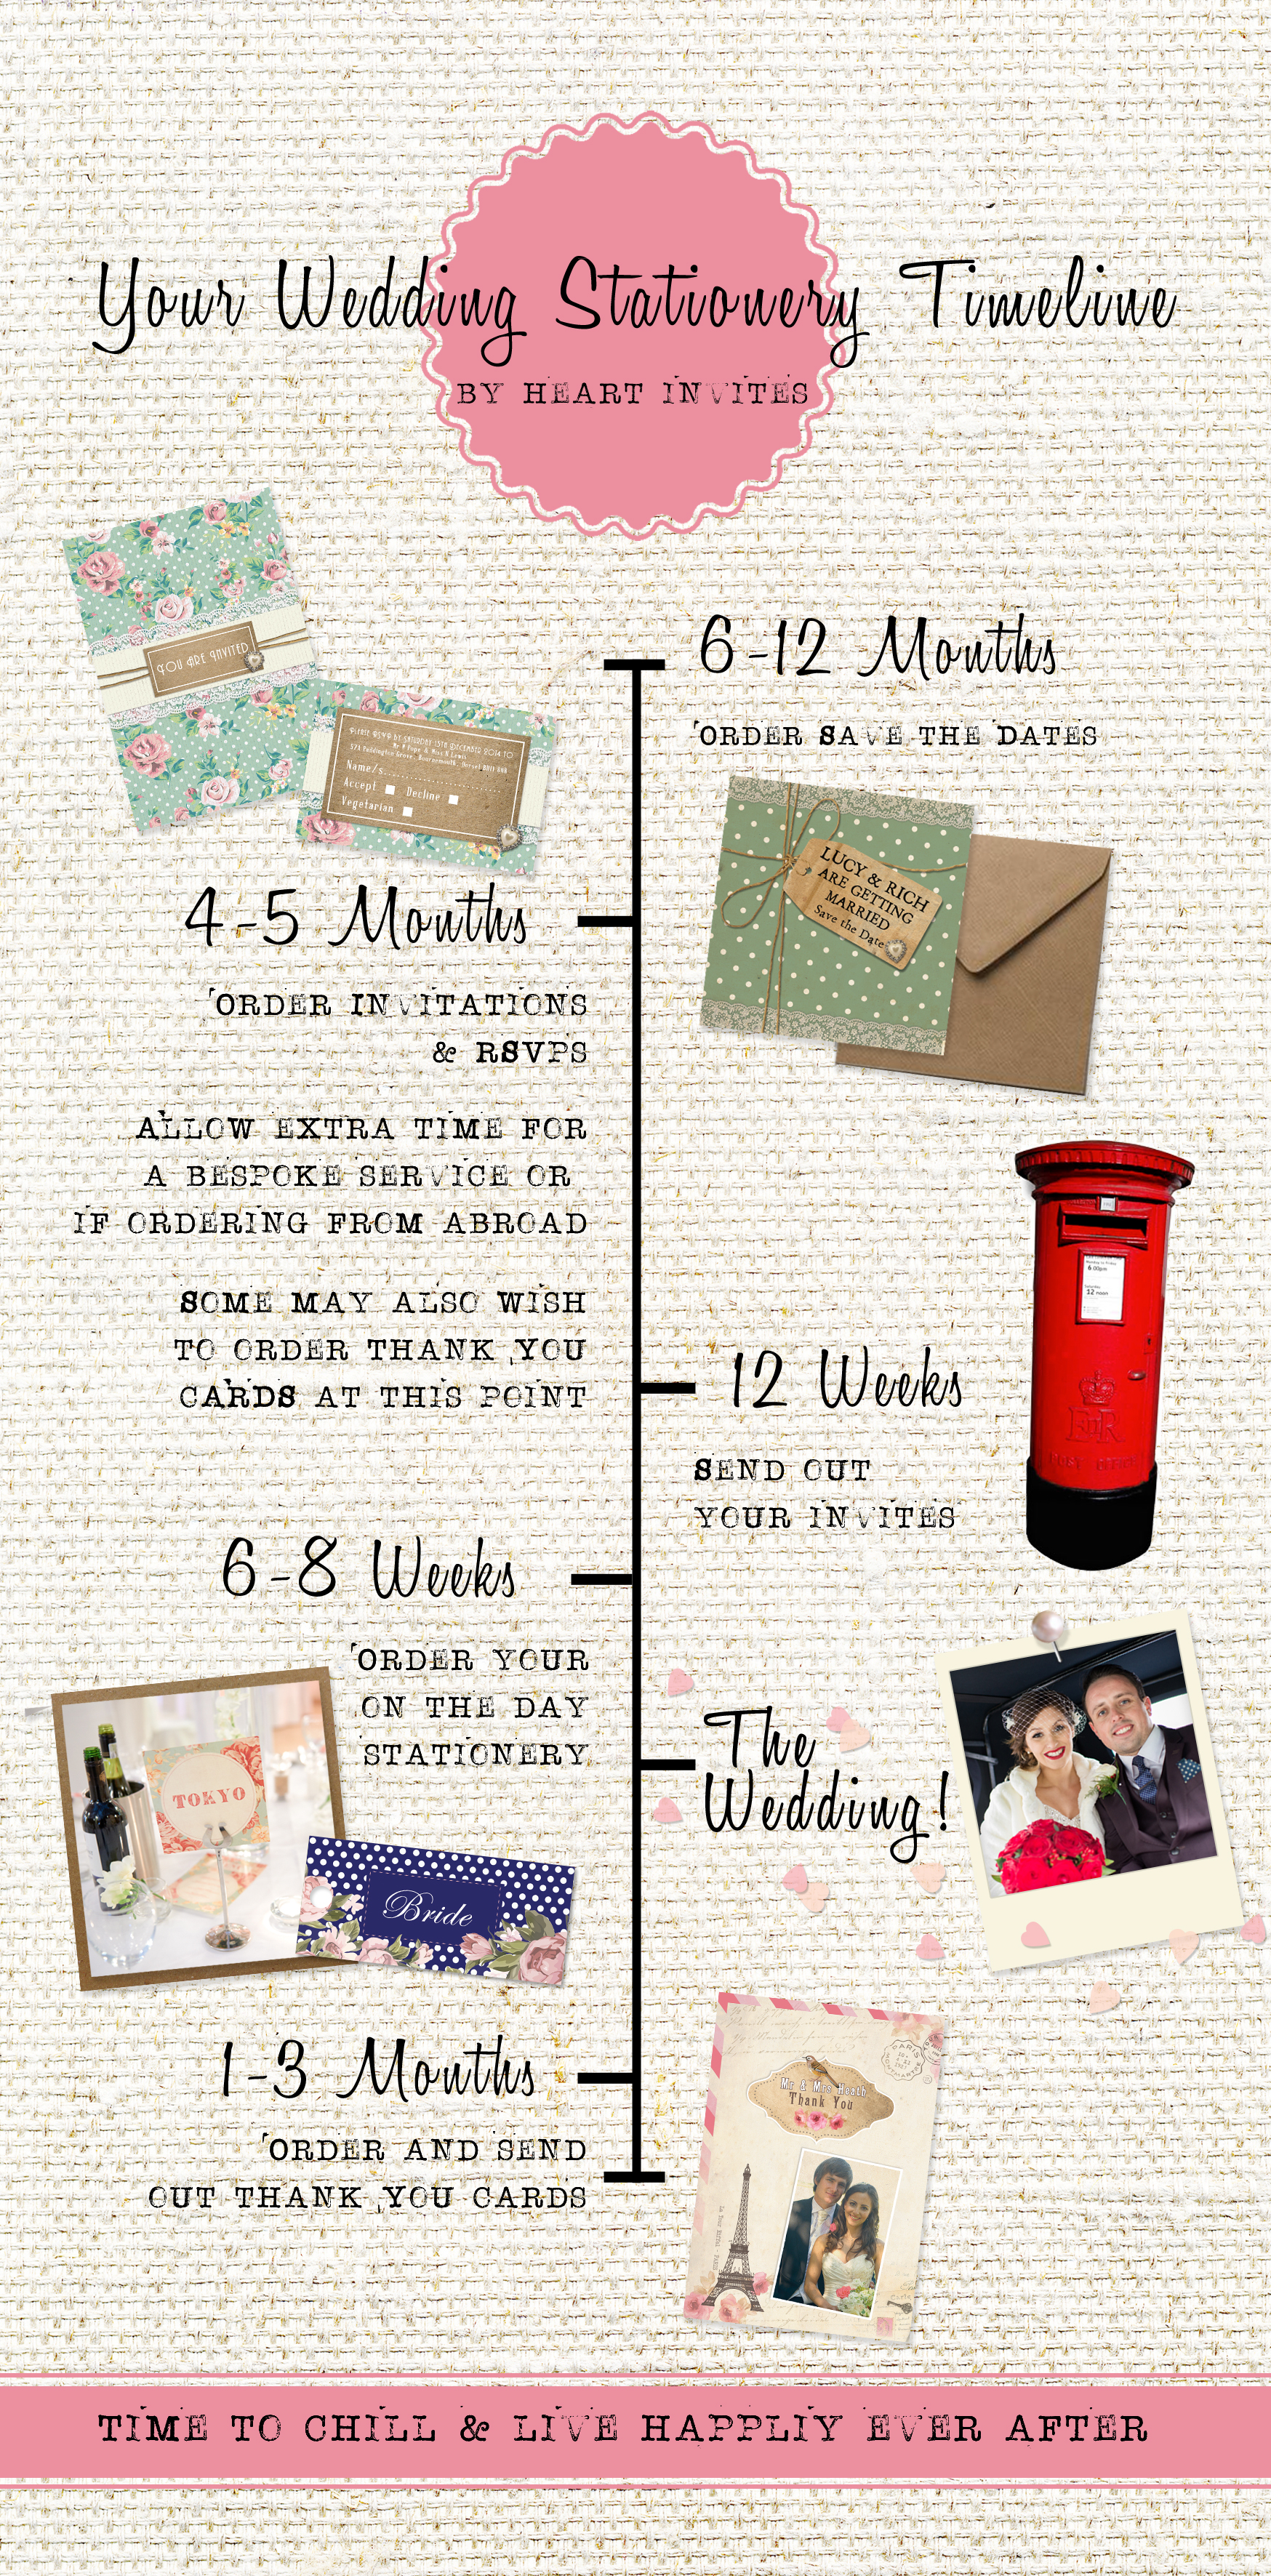 Wedding Stationery Timeline